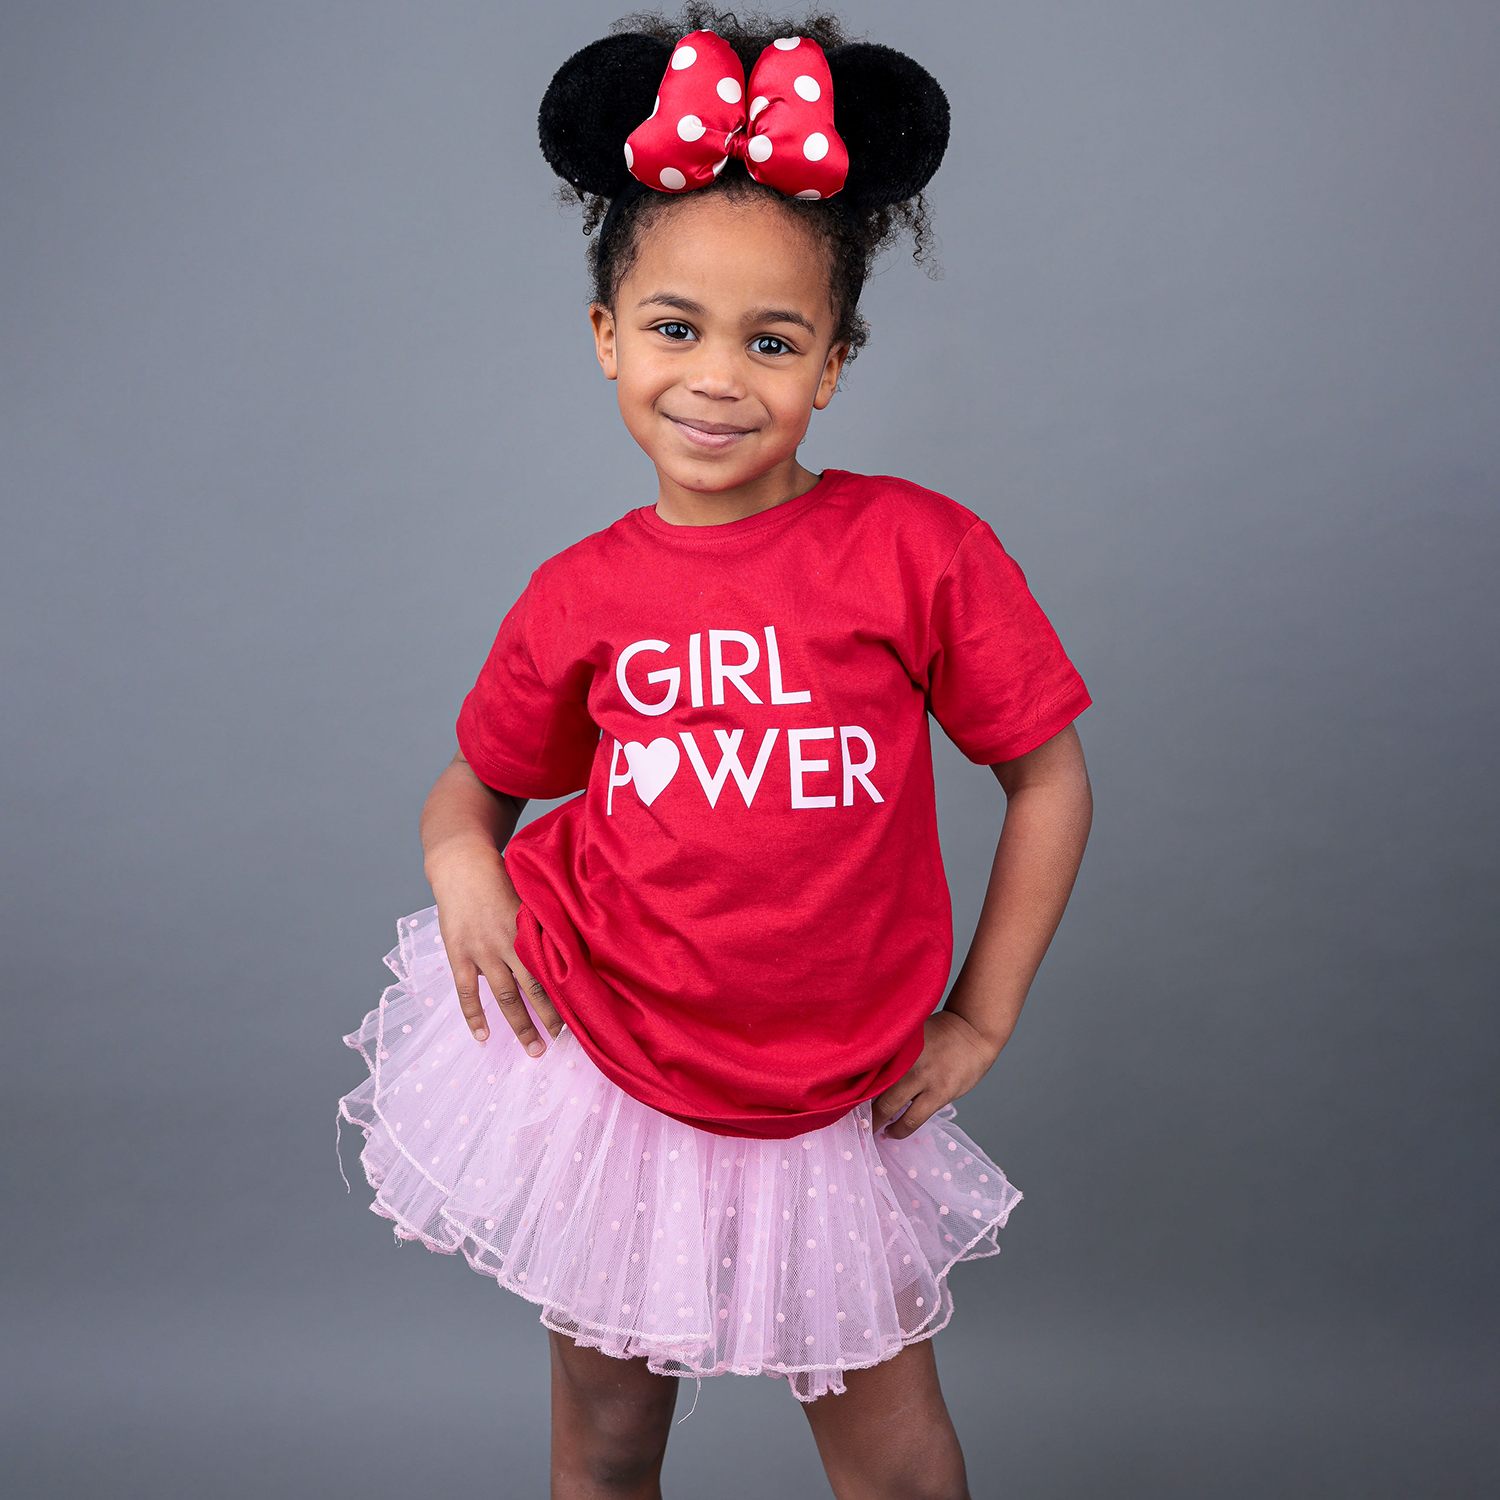 'Girl power' kids shortsleeve shirt